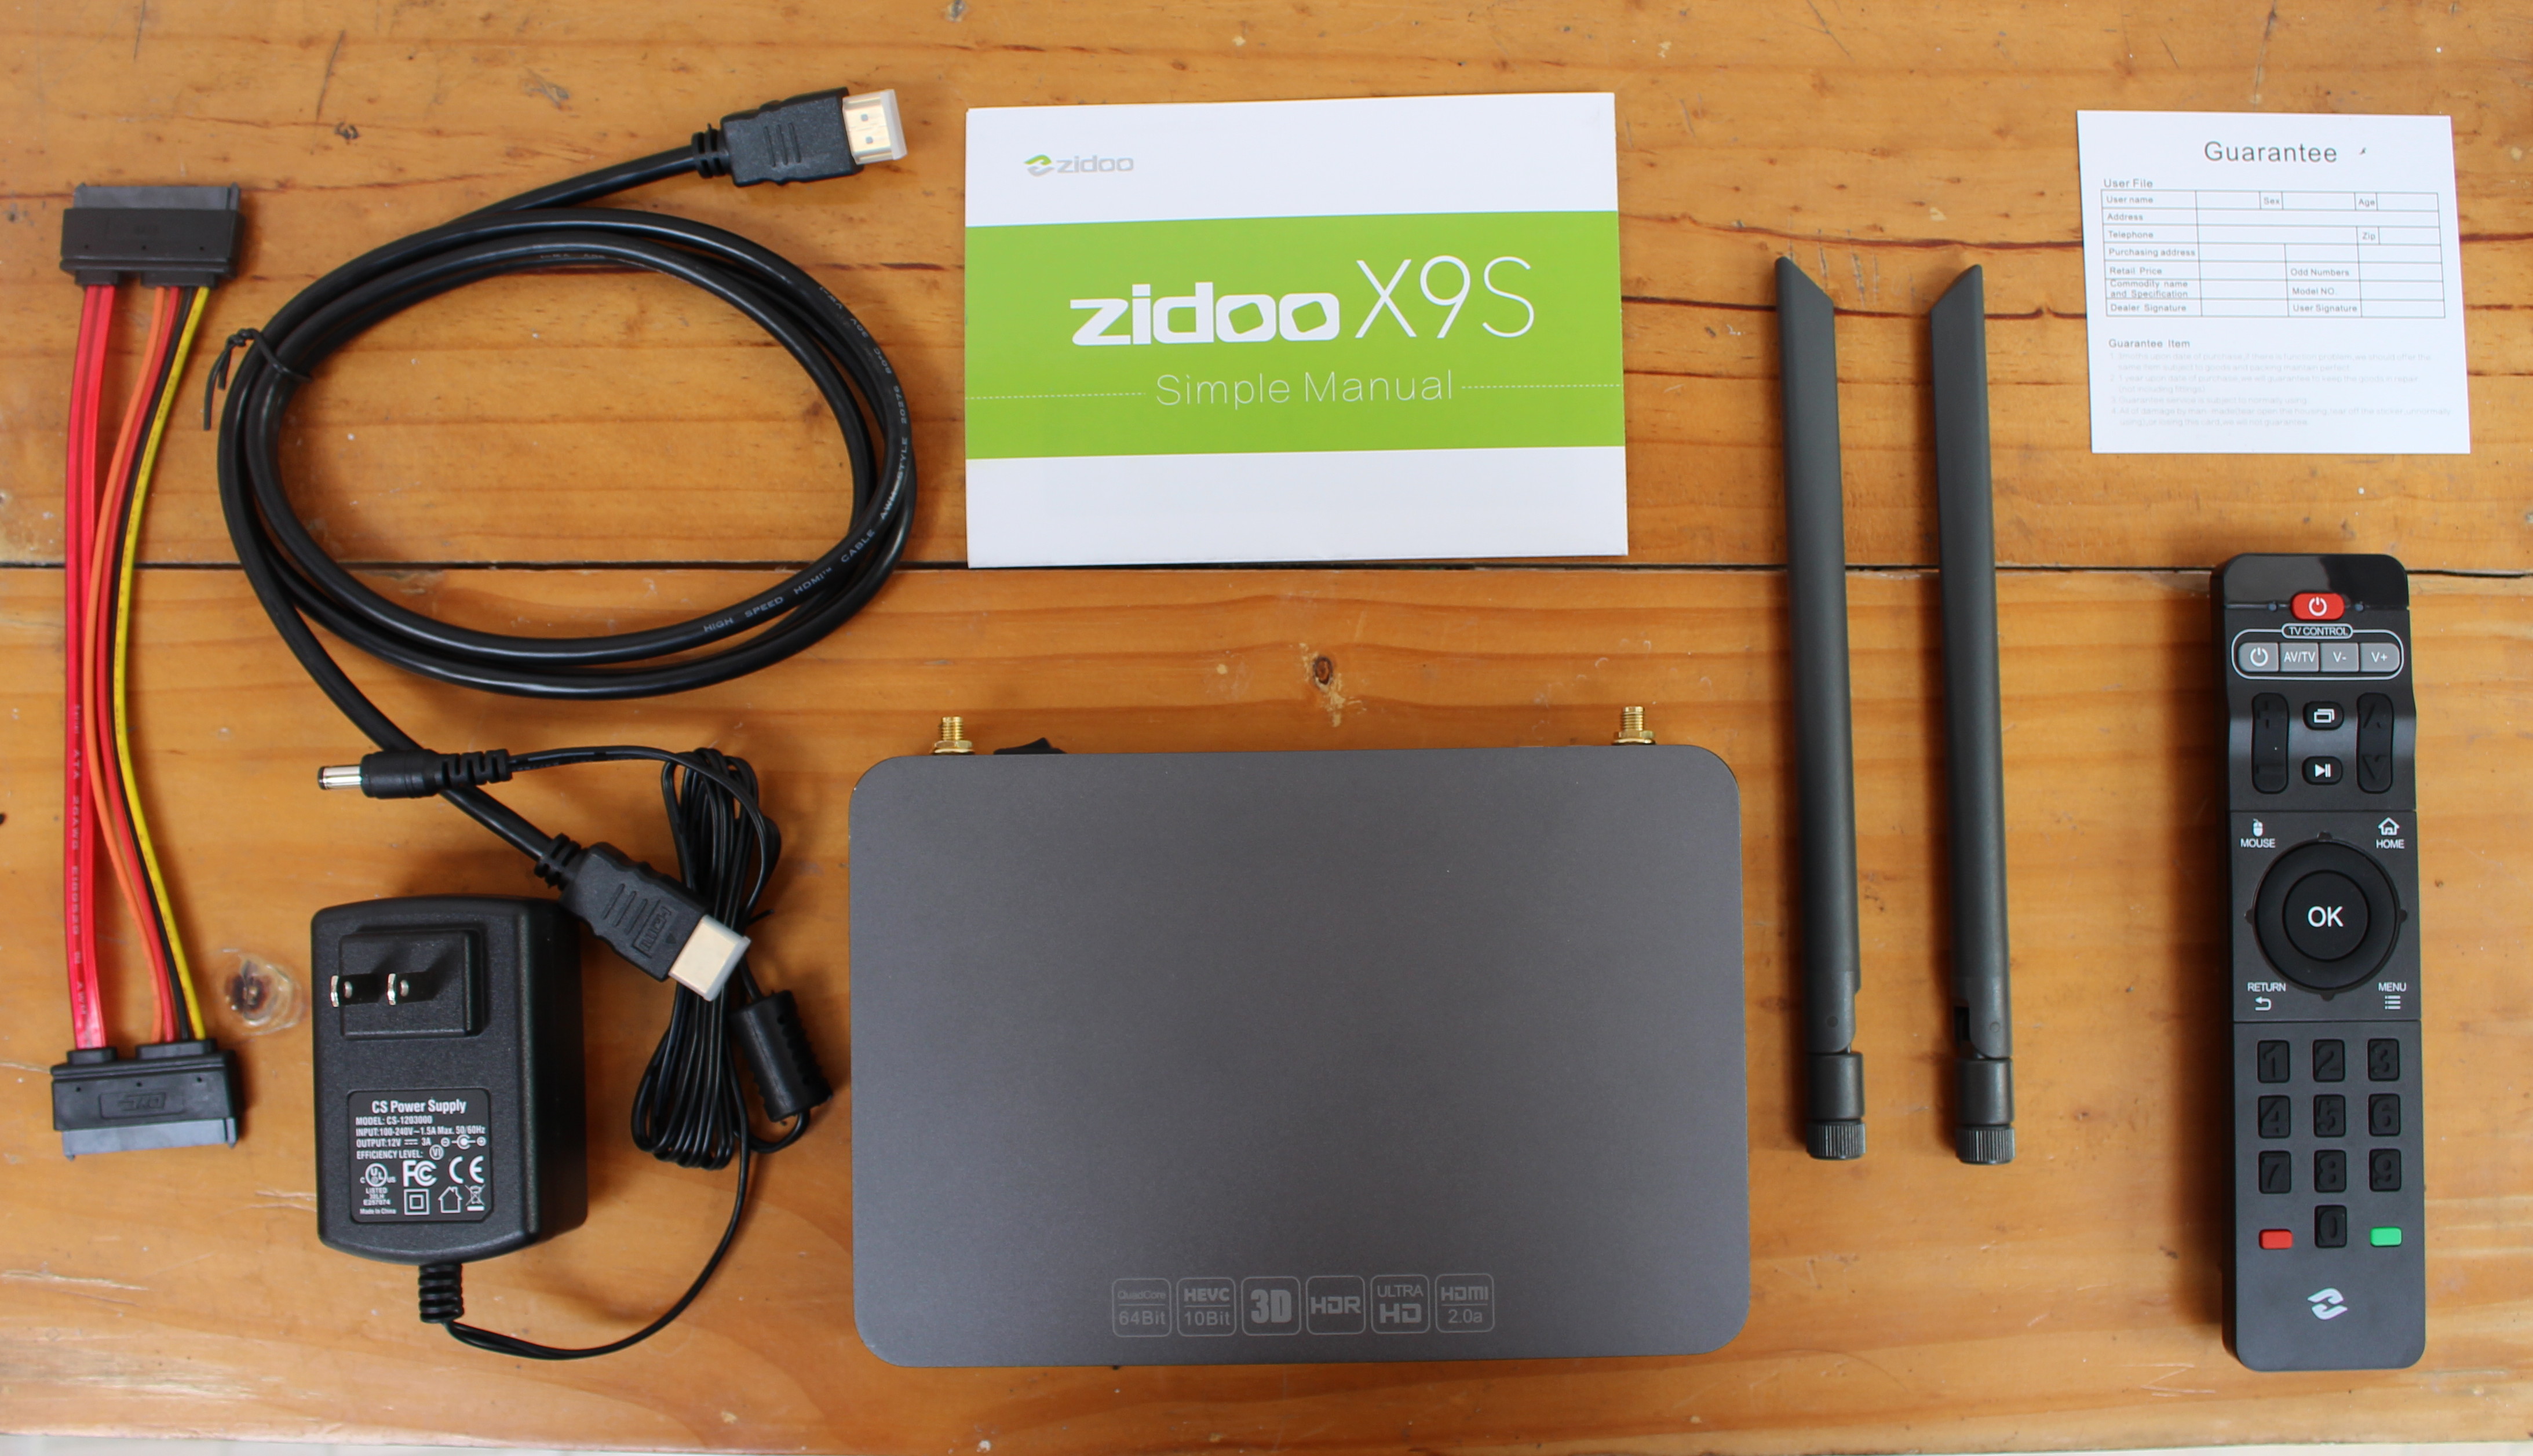 Zidoo maakt details X9S Android mediaplayer bekend - GadgetGear.nl